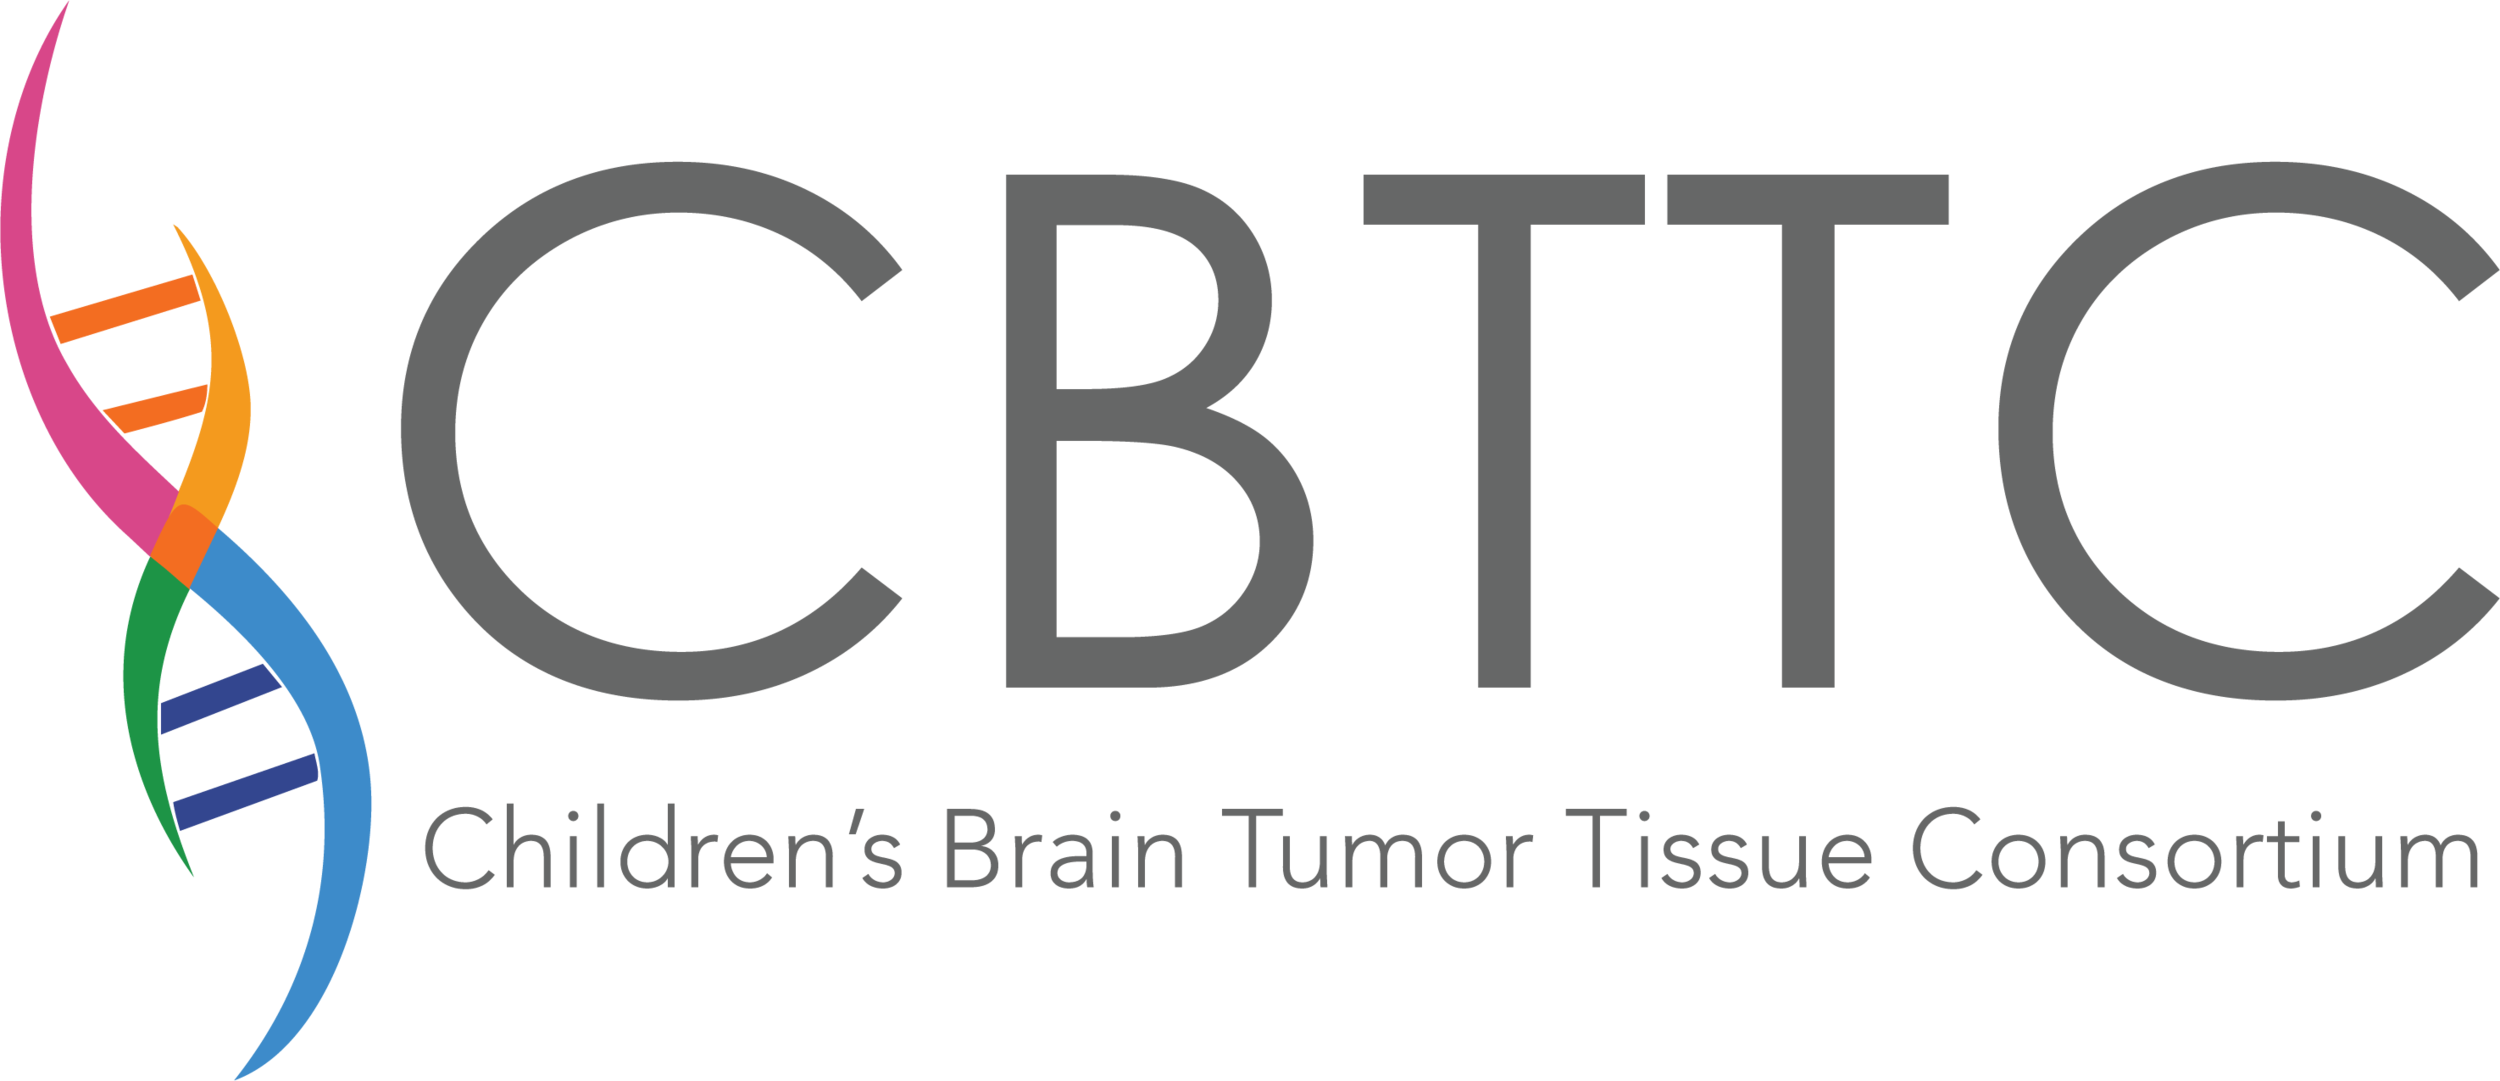 CBTTC Logo-01.png